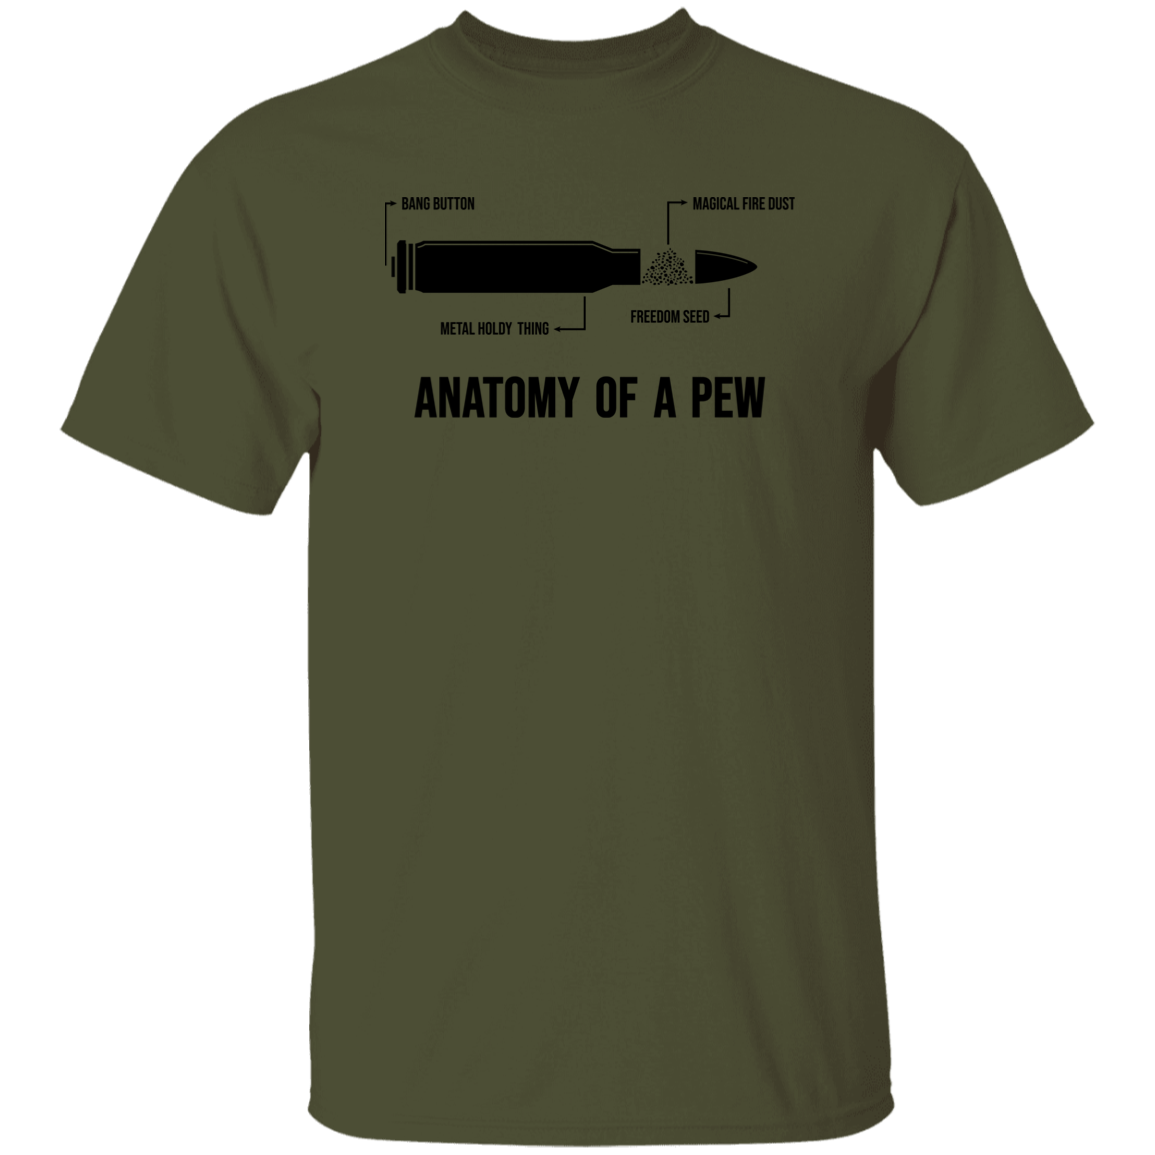 Anatomy of Pew Shirt